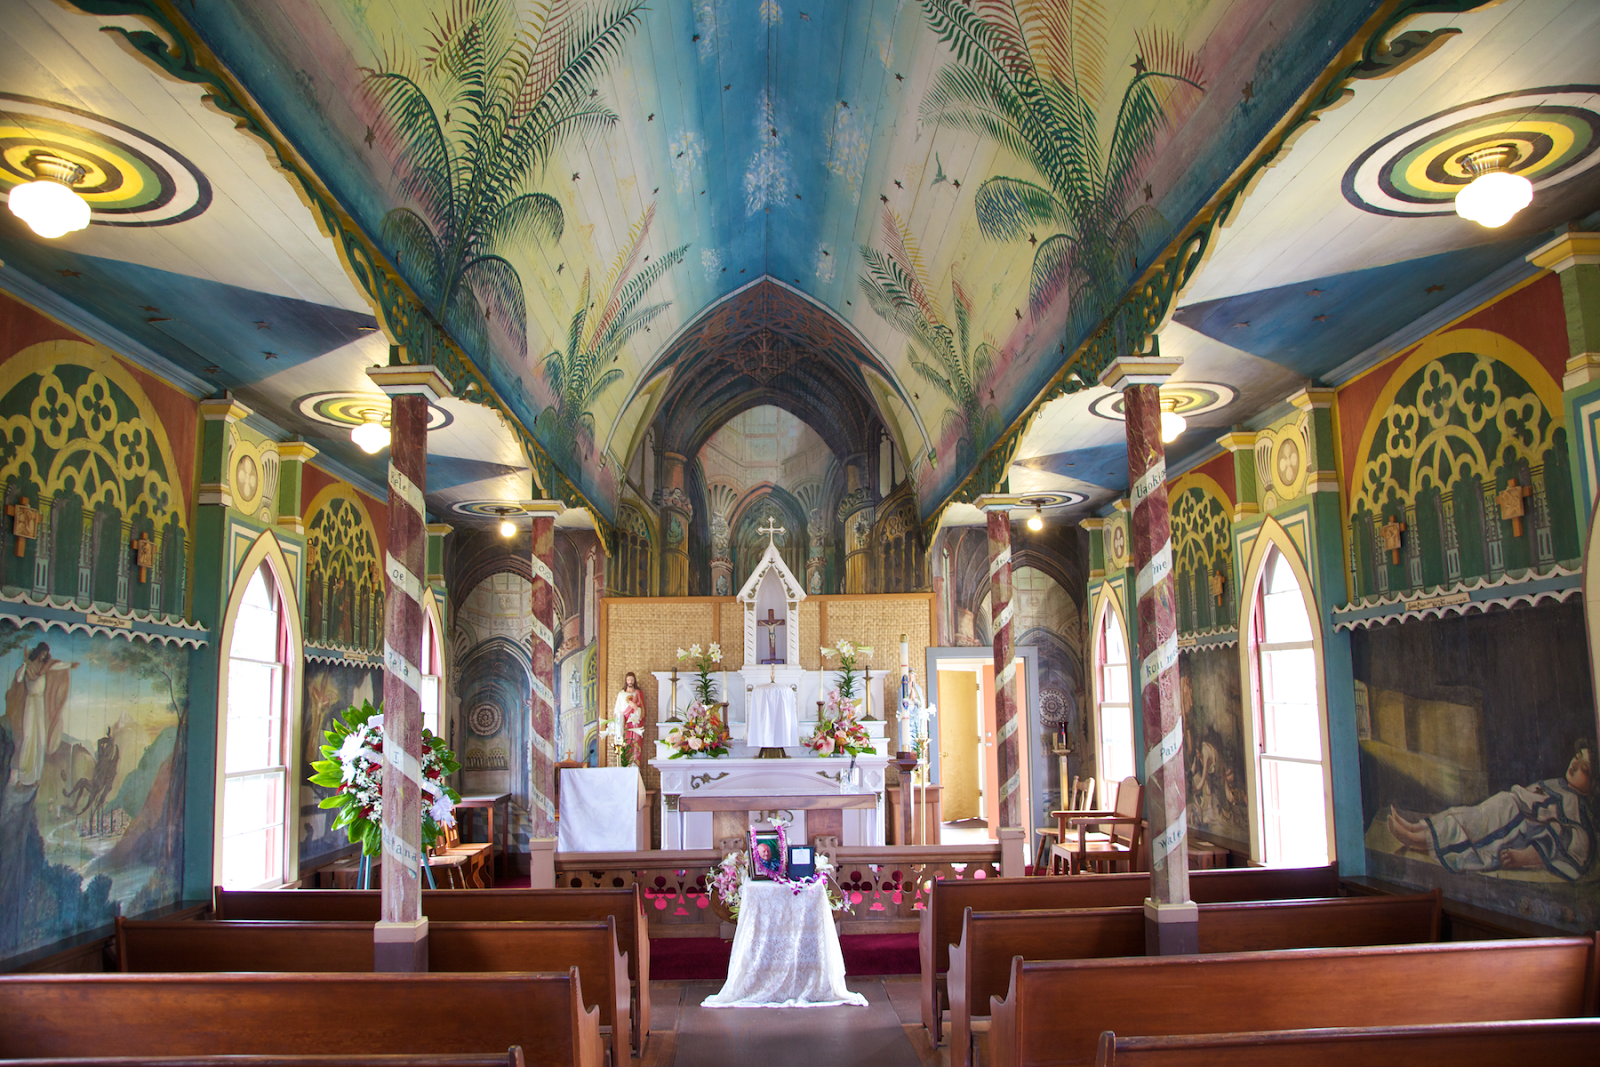 St. Benedict's Painted Church - Kona, Hawaii